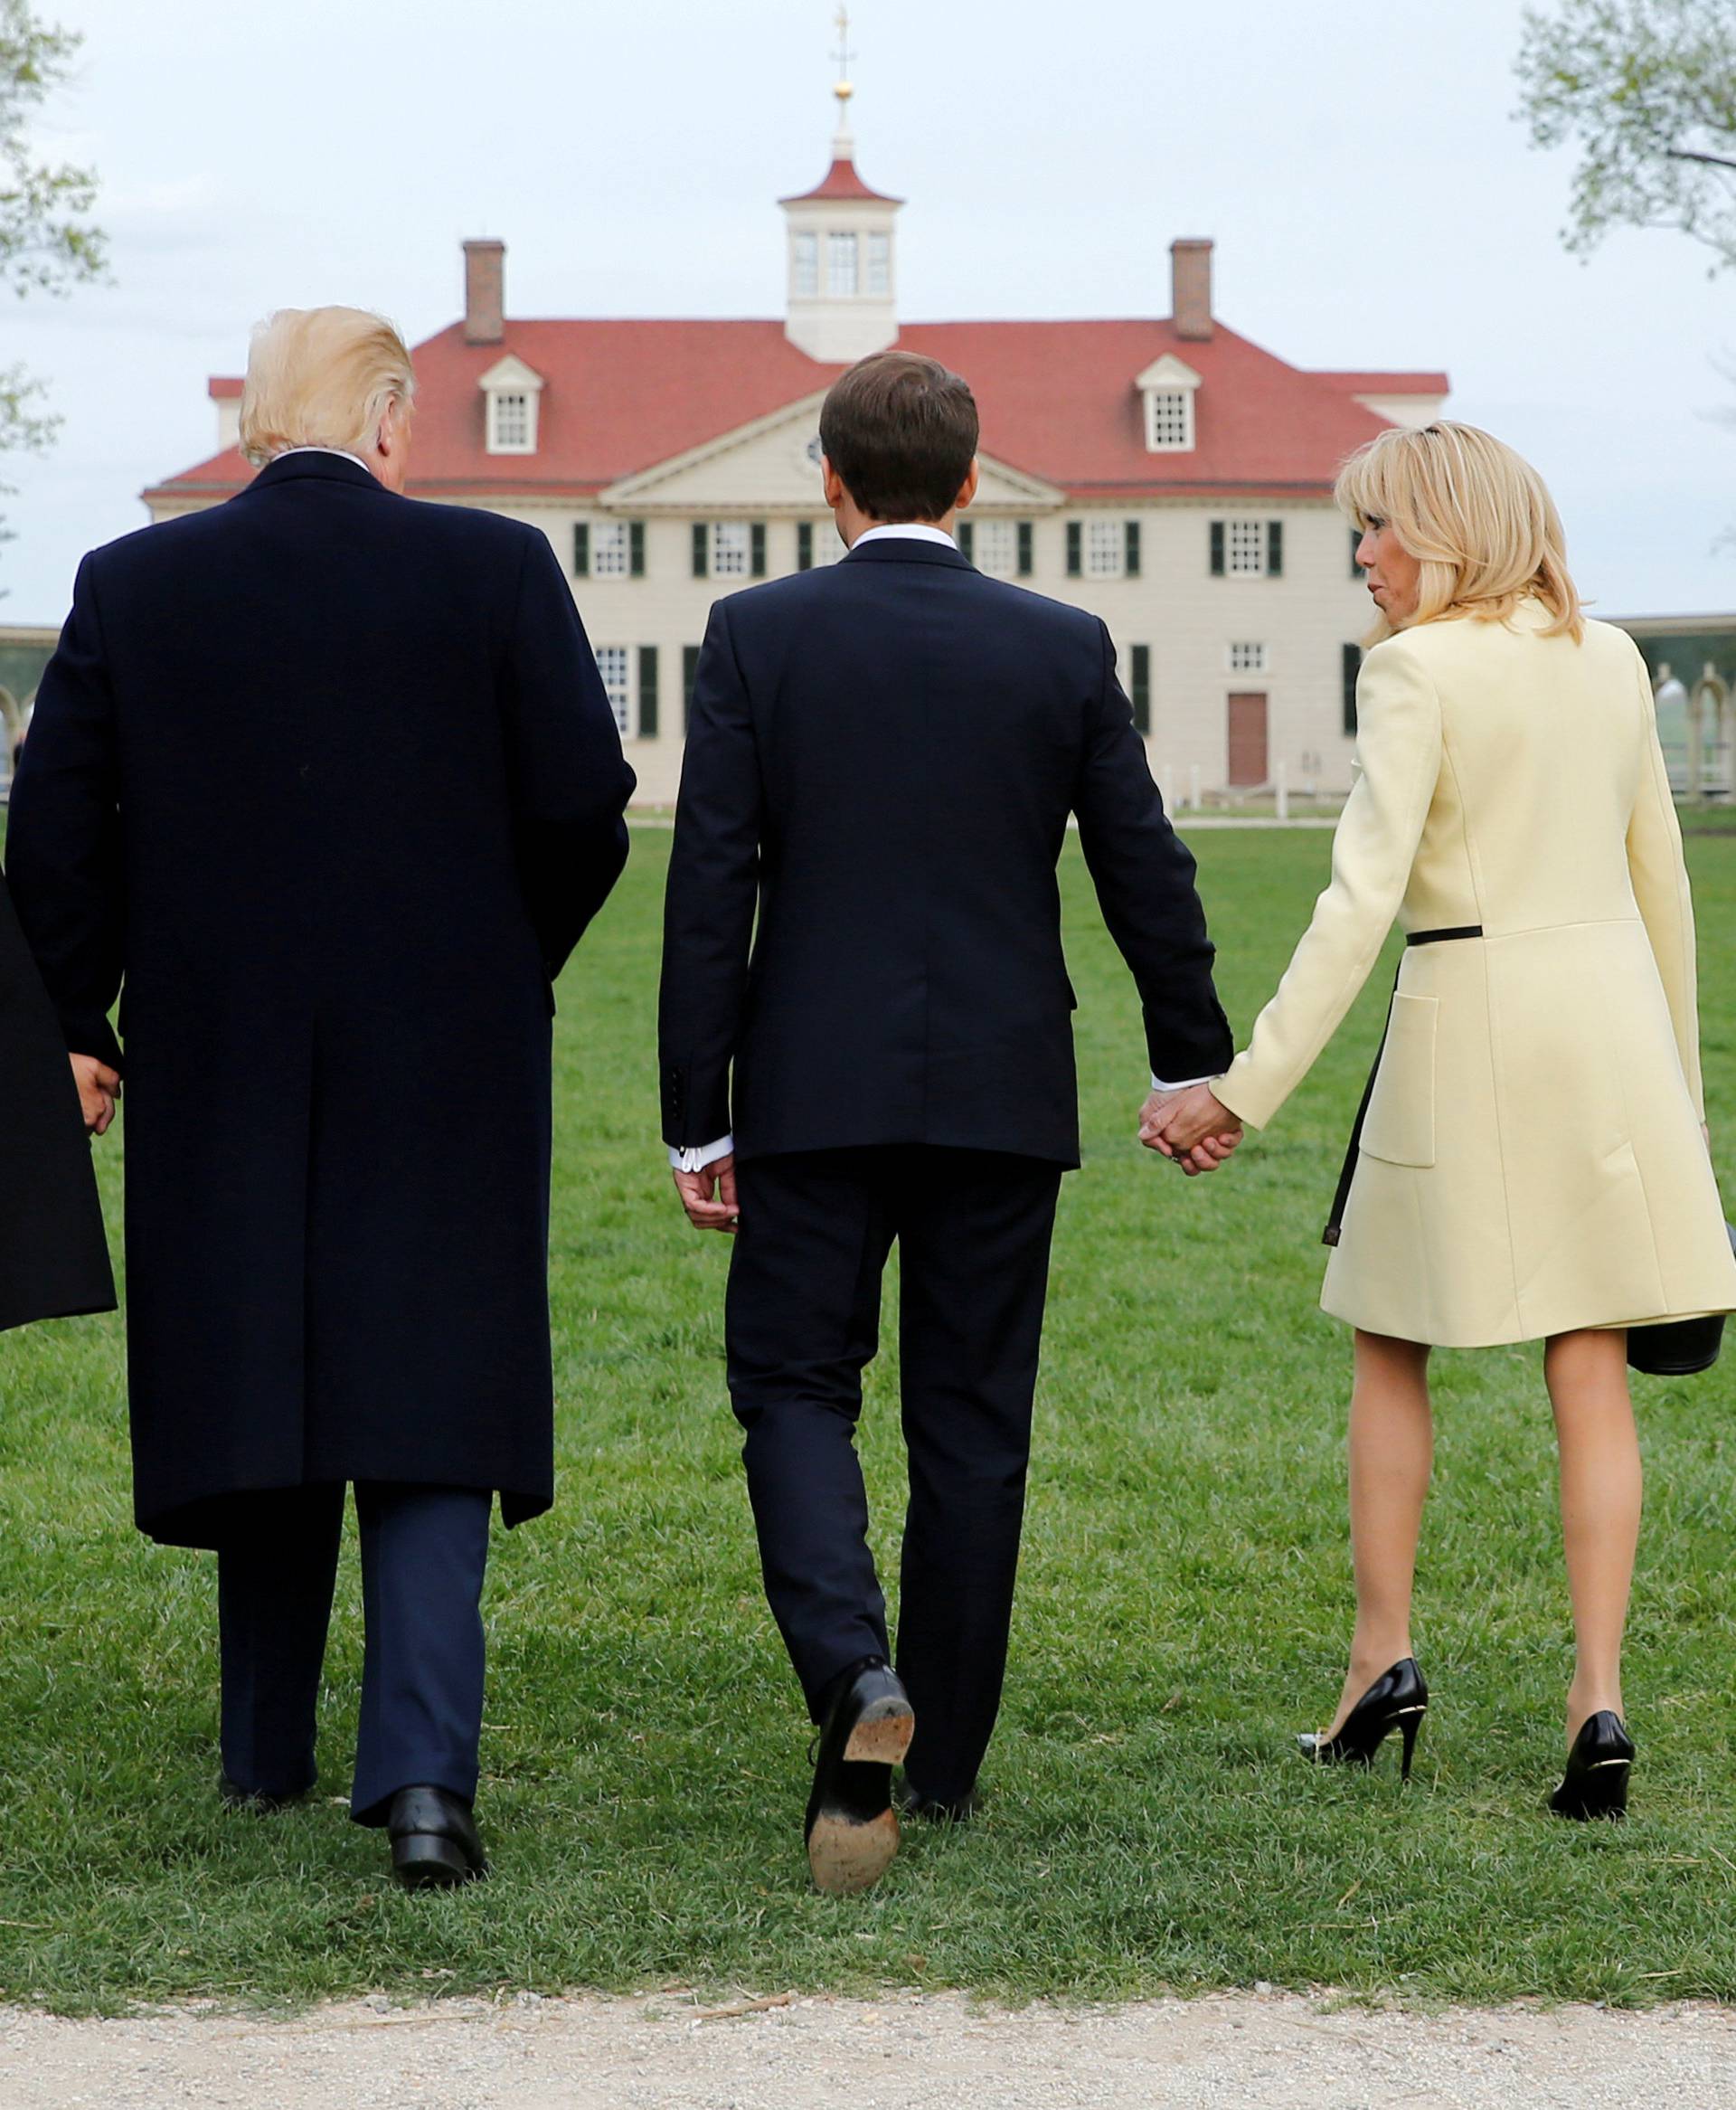 Trump escorts France's Macron at the estate of the first U.S. President George Washington in Mount Vernon, Virginia outside Washington